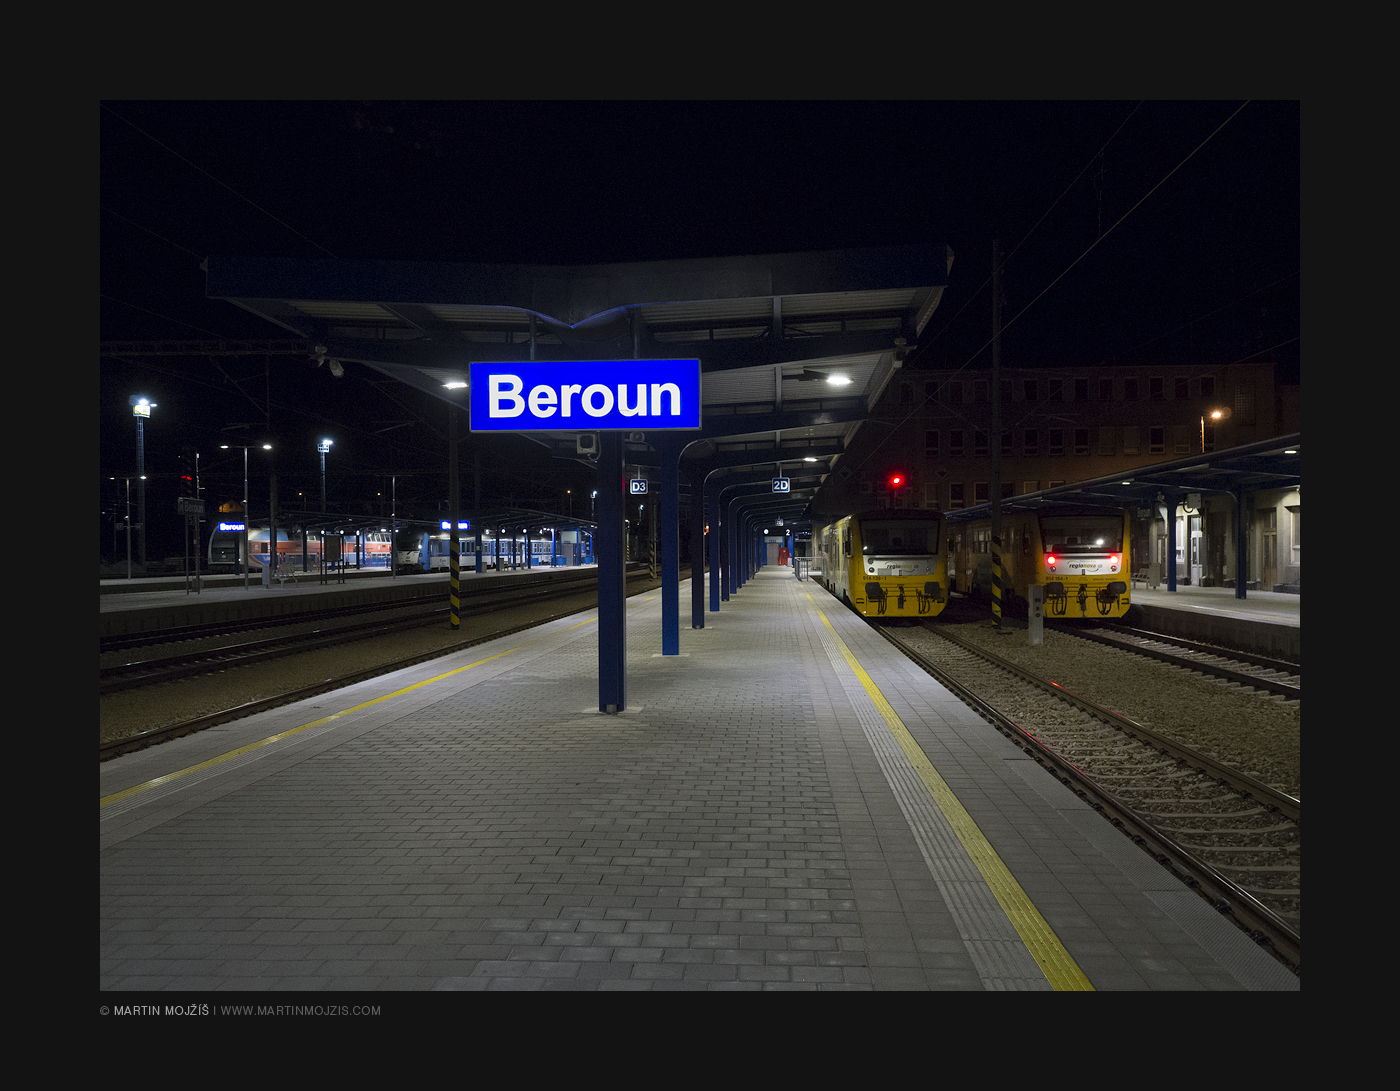 Beroun railway station at night.